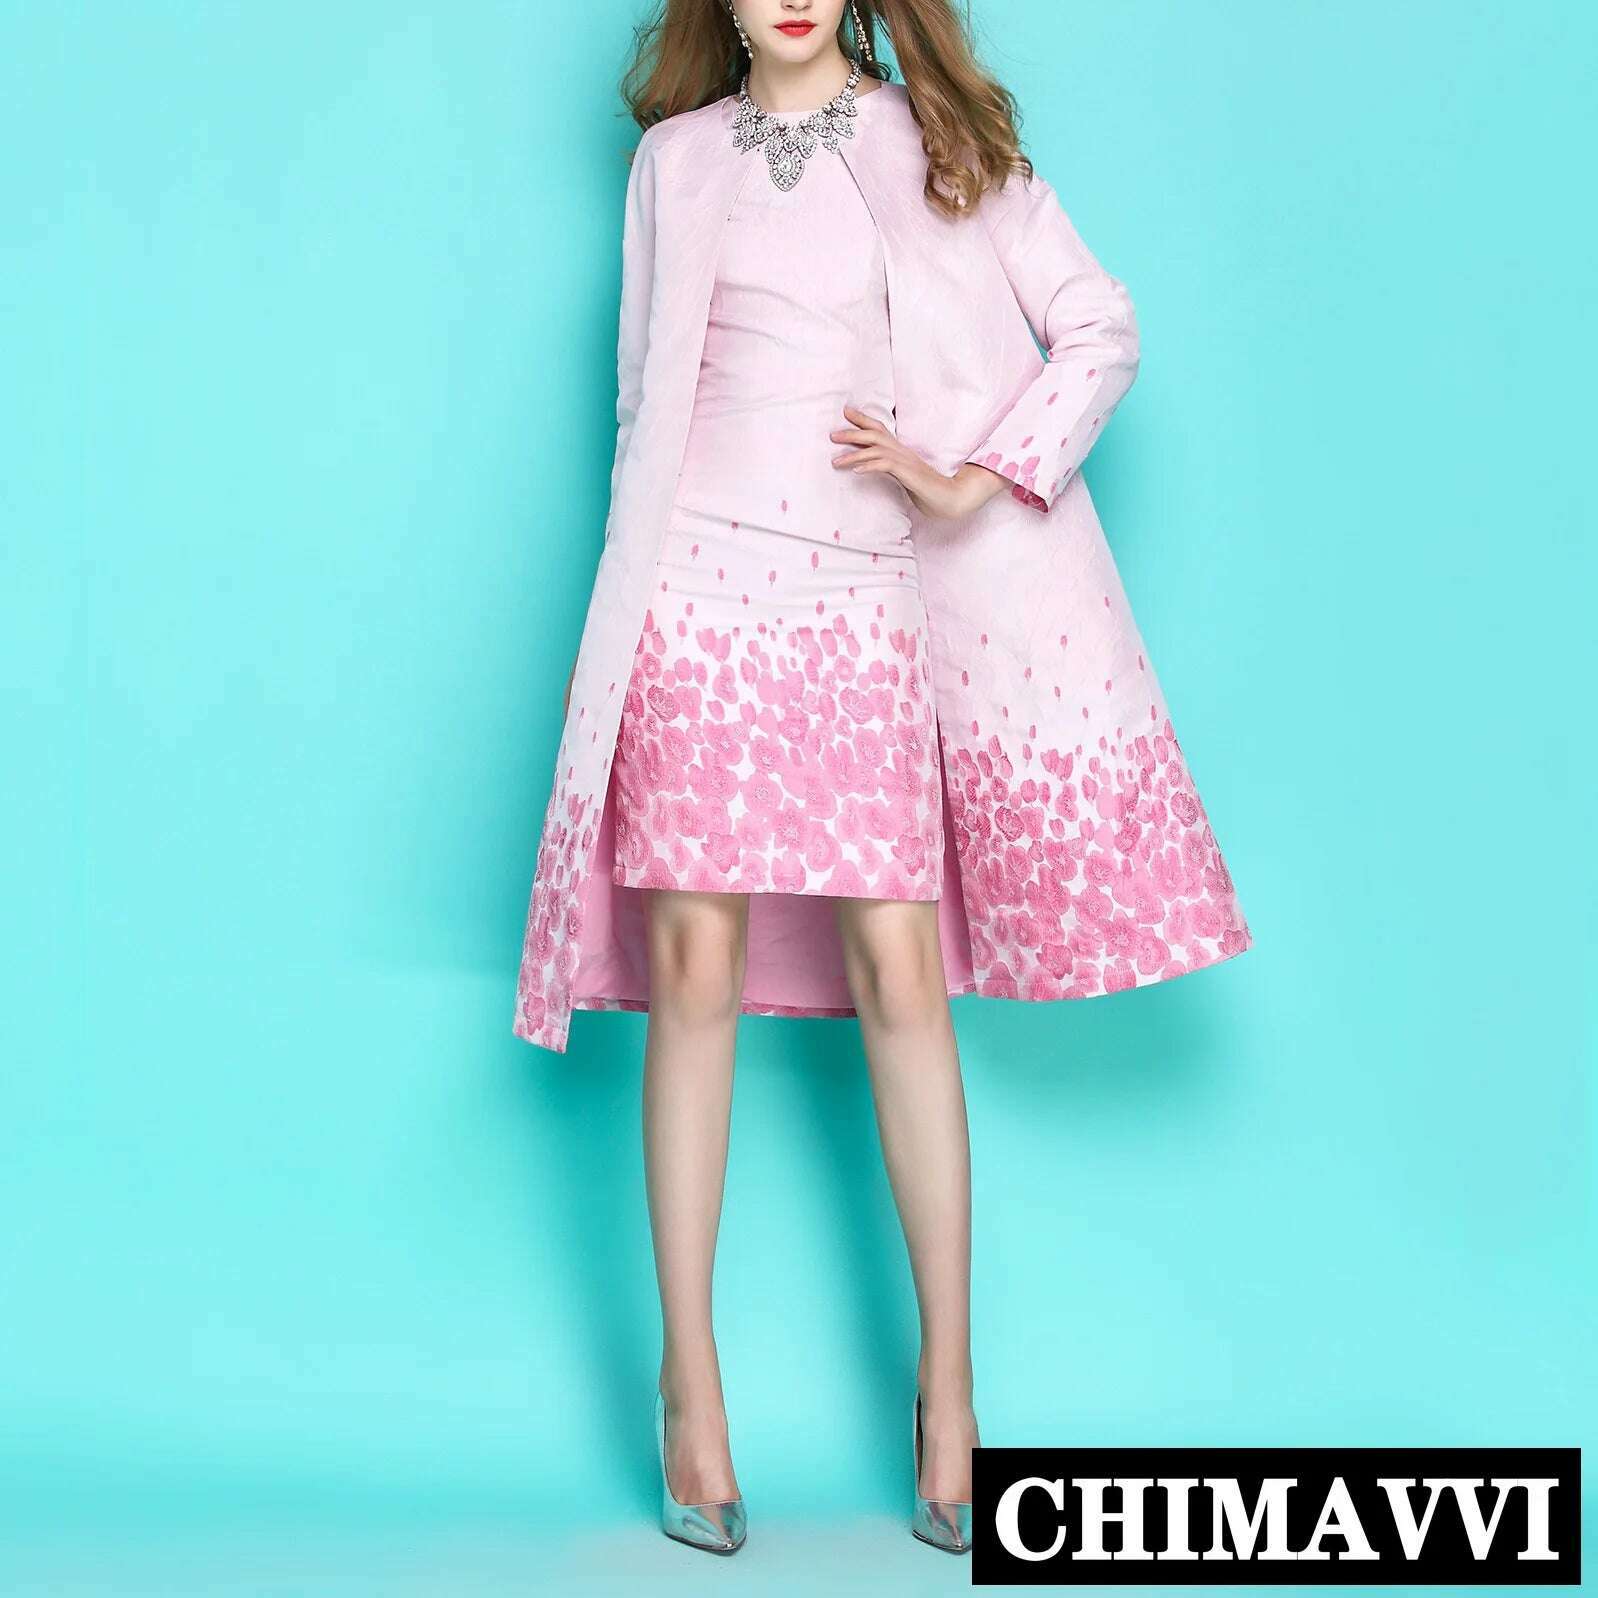 KIMLUD, New Spring Autumn OL Ladies Delicate Pink Flower Jacquard Long Trench Coat Slim Overcoat + Tank Dress Fashion Women Dress Suit, KIMLUD Women's Clothes